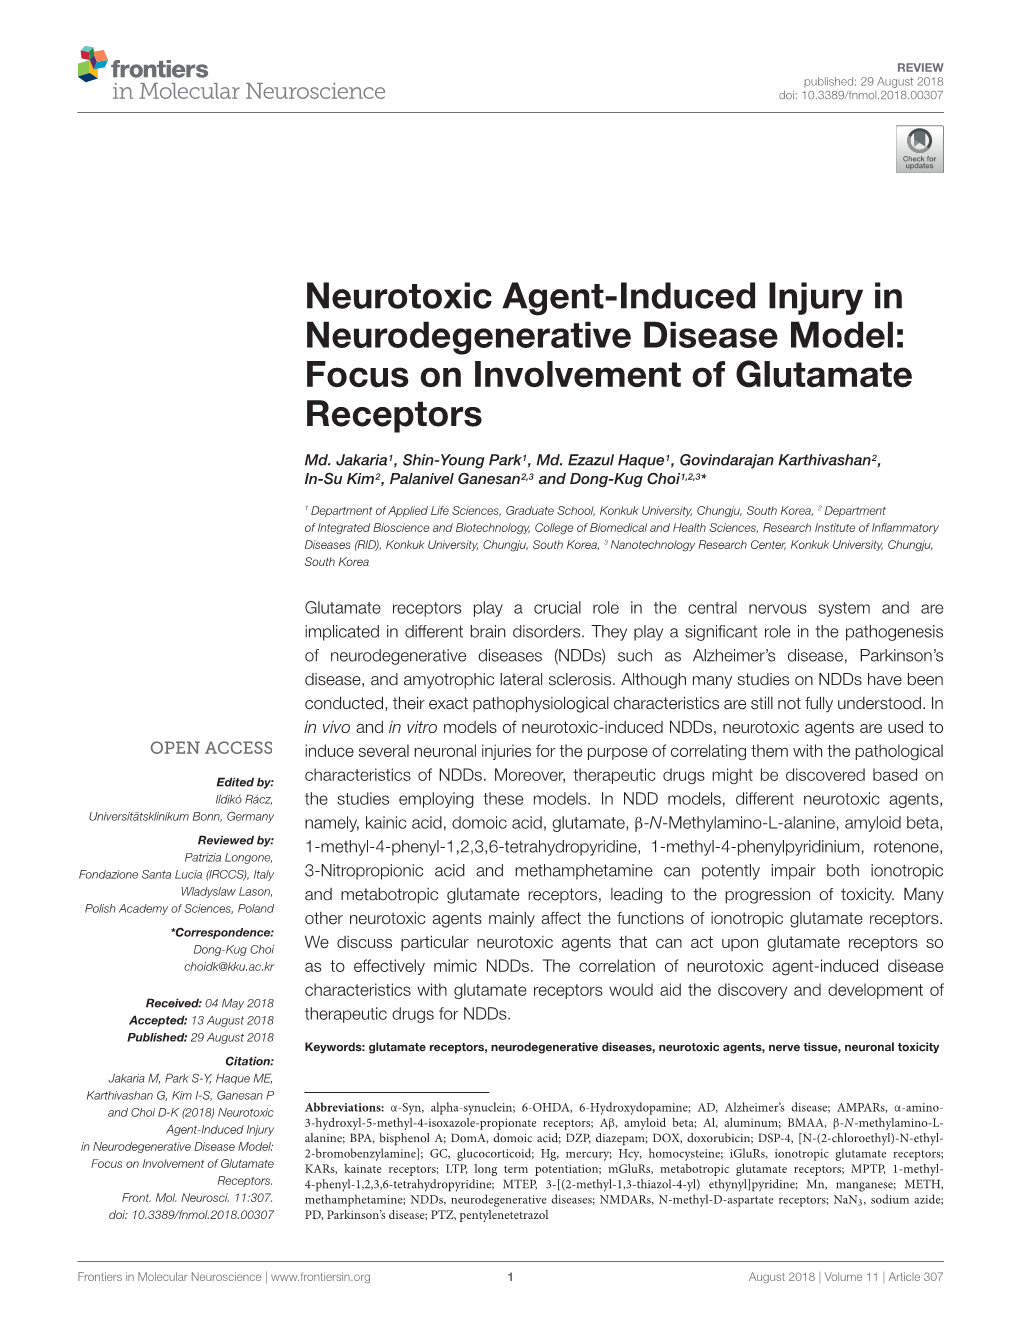 Neurotoxic Agent-Induced Injury in Neurodegenerative Disease Model: Focus on Involvement of Glutamate Receptors